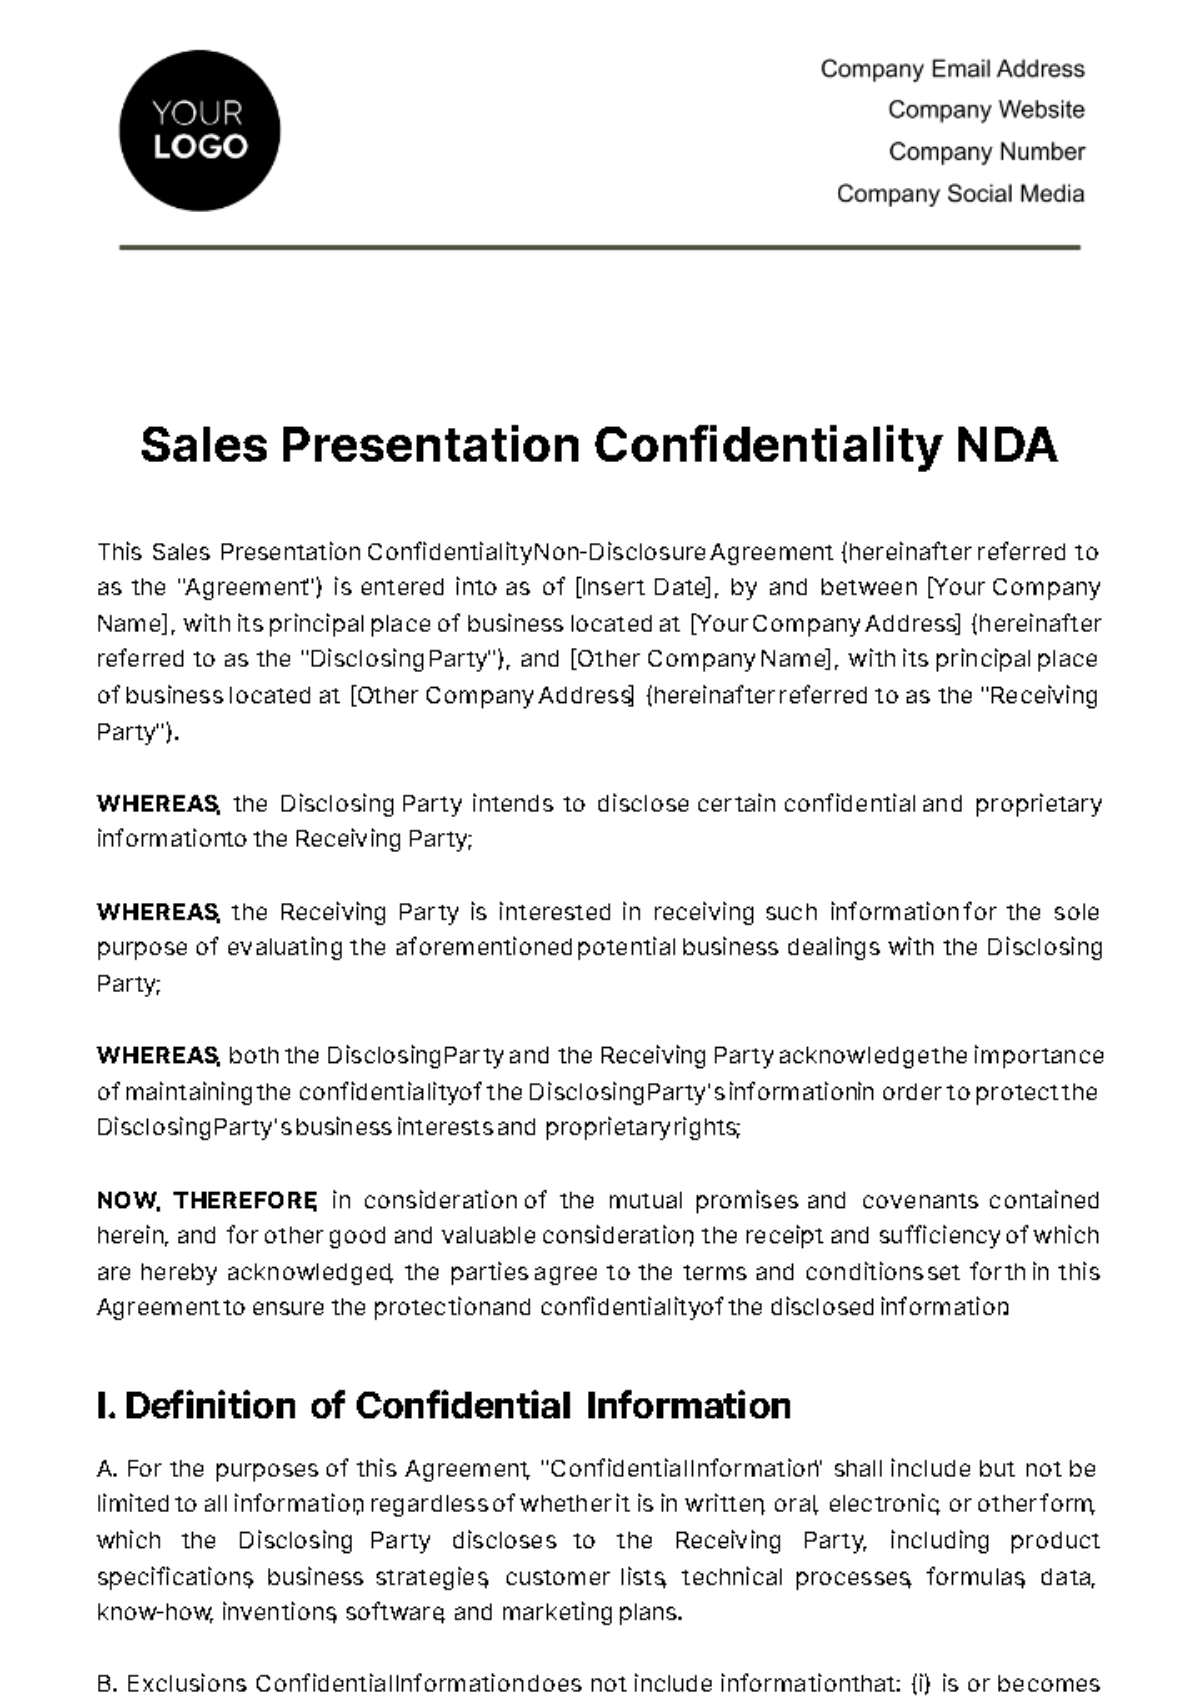 Free Sales Presentation Confidentiality NDA Template